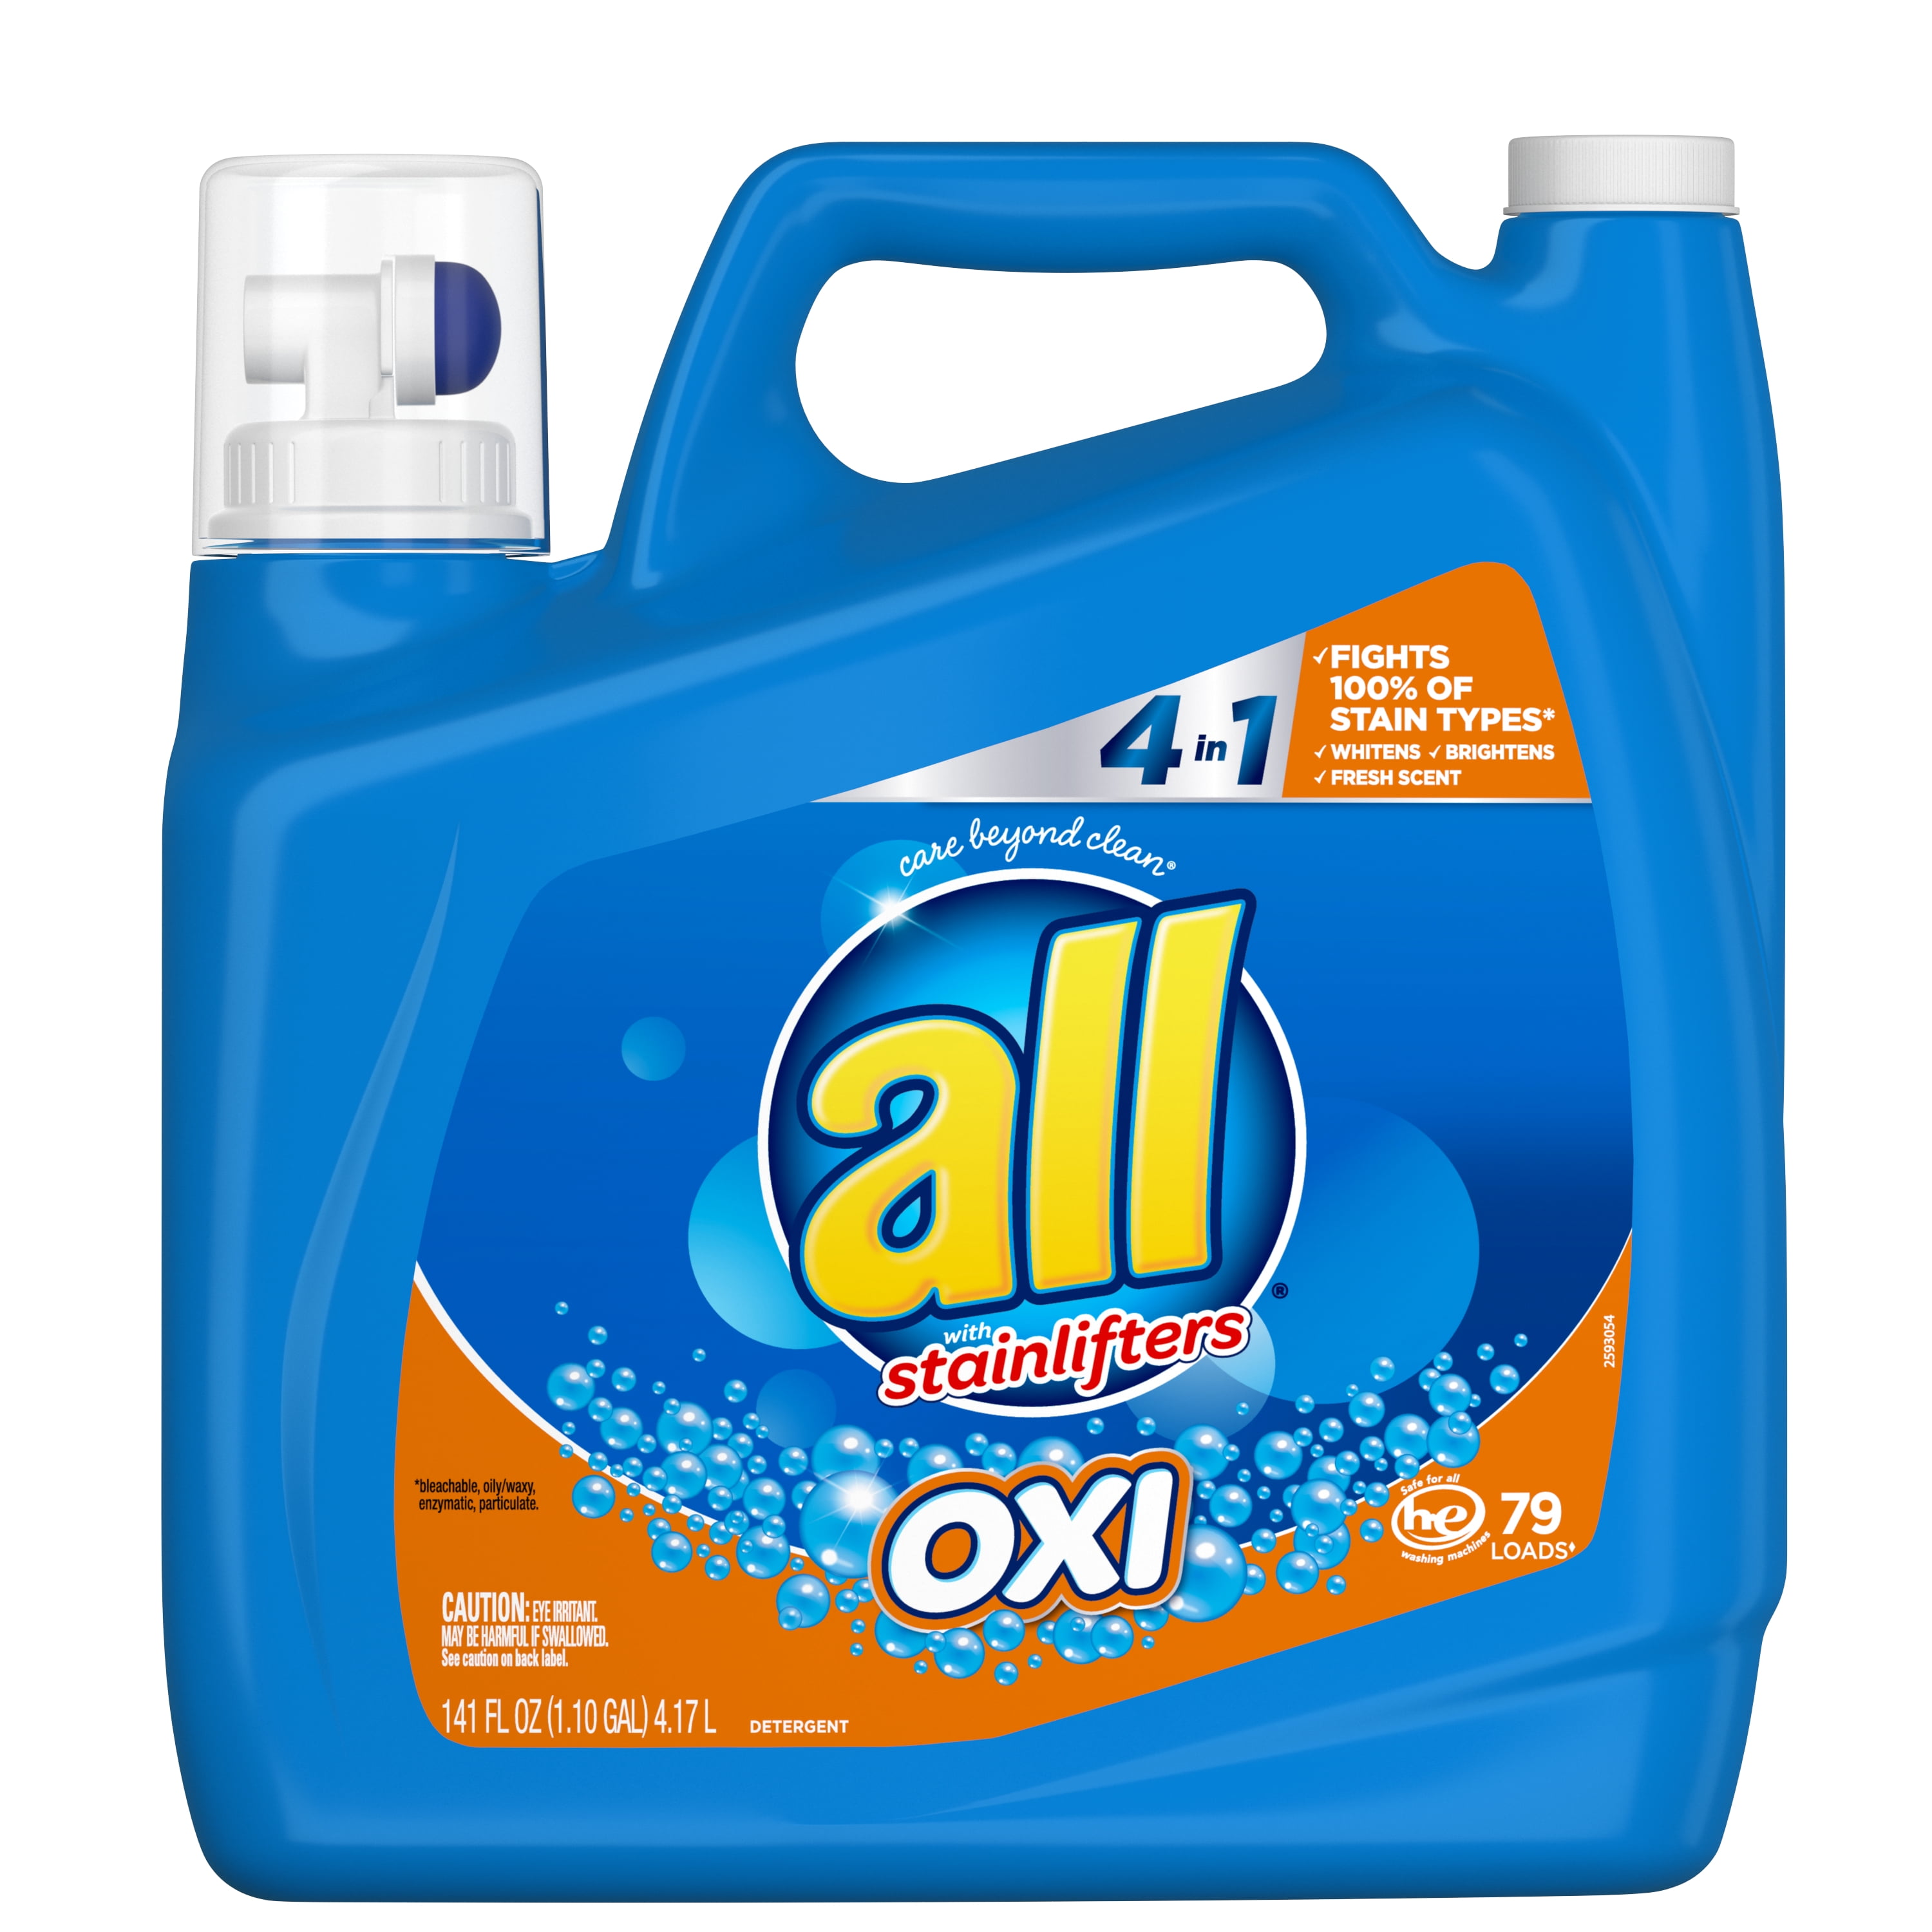 a detergent